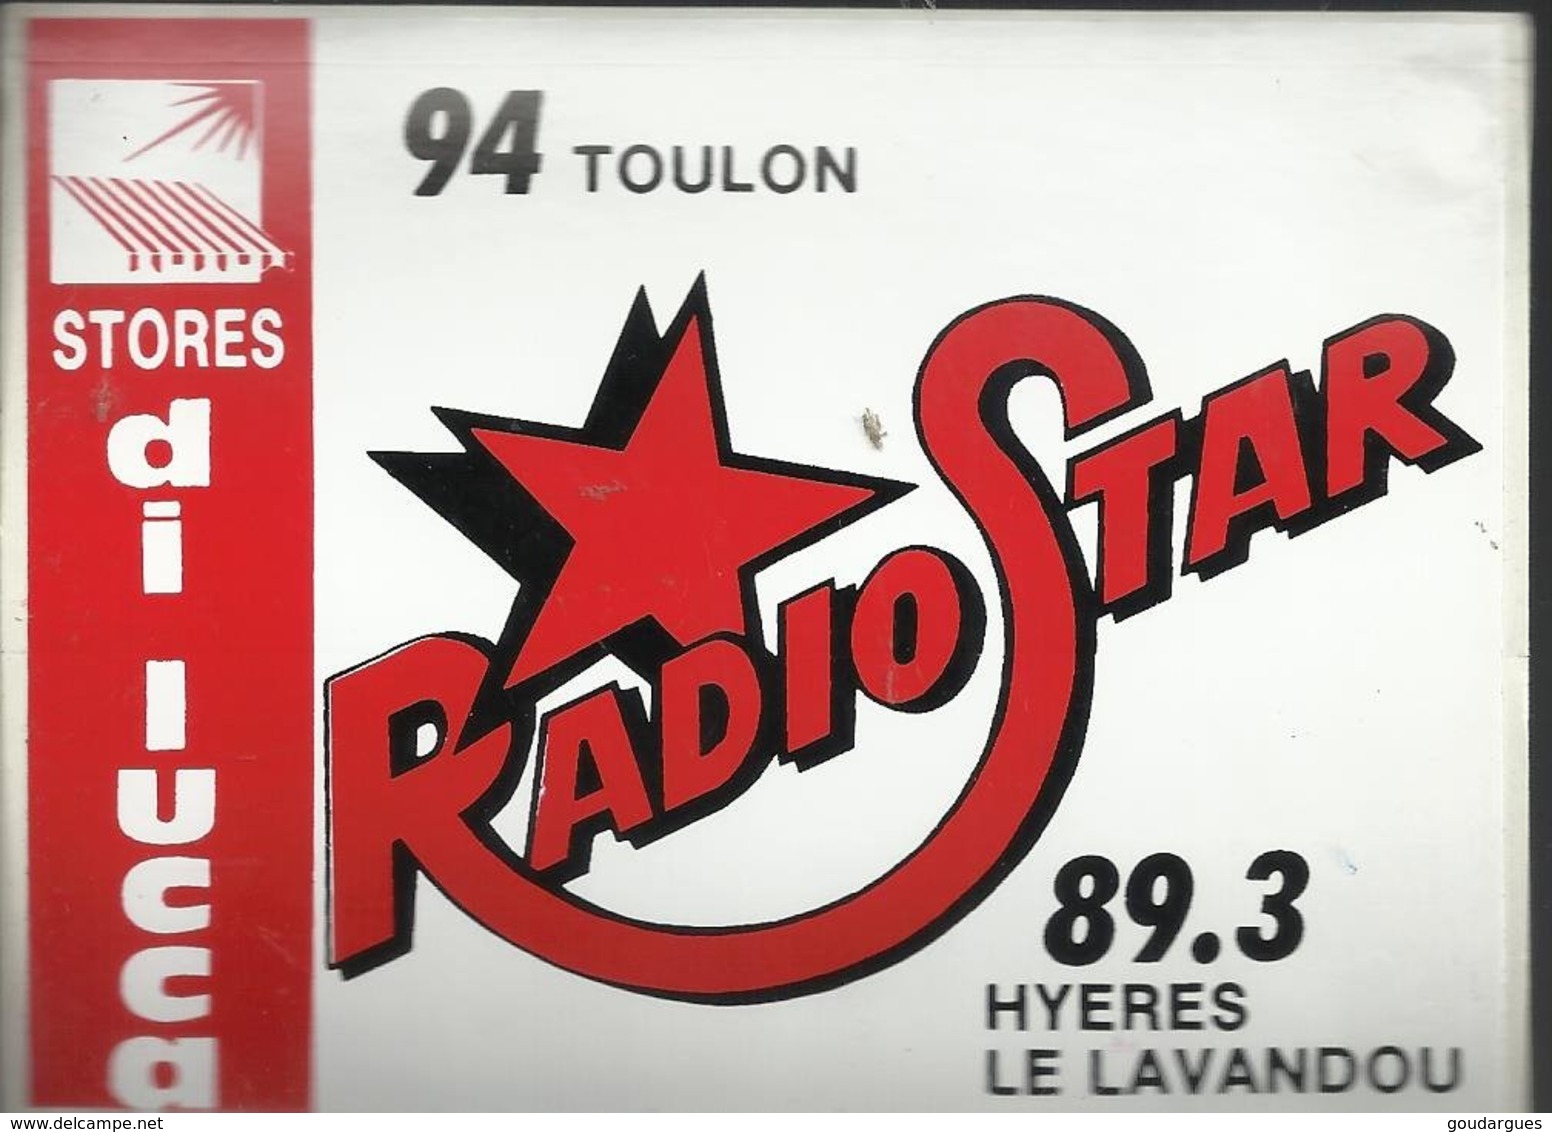 Autocollant - Radio Star - 94 Toulon - 89,3 Hyeres Le Lavandou - Pub Stores Di Lucca - Pegatinas